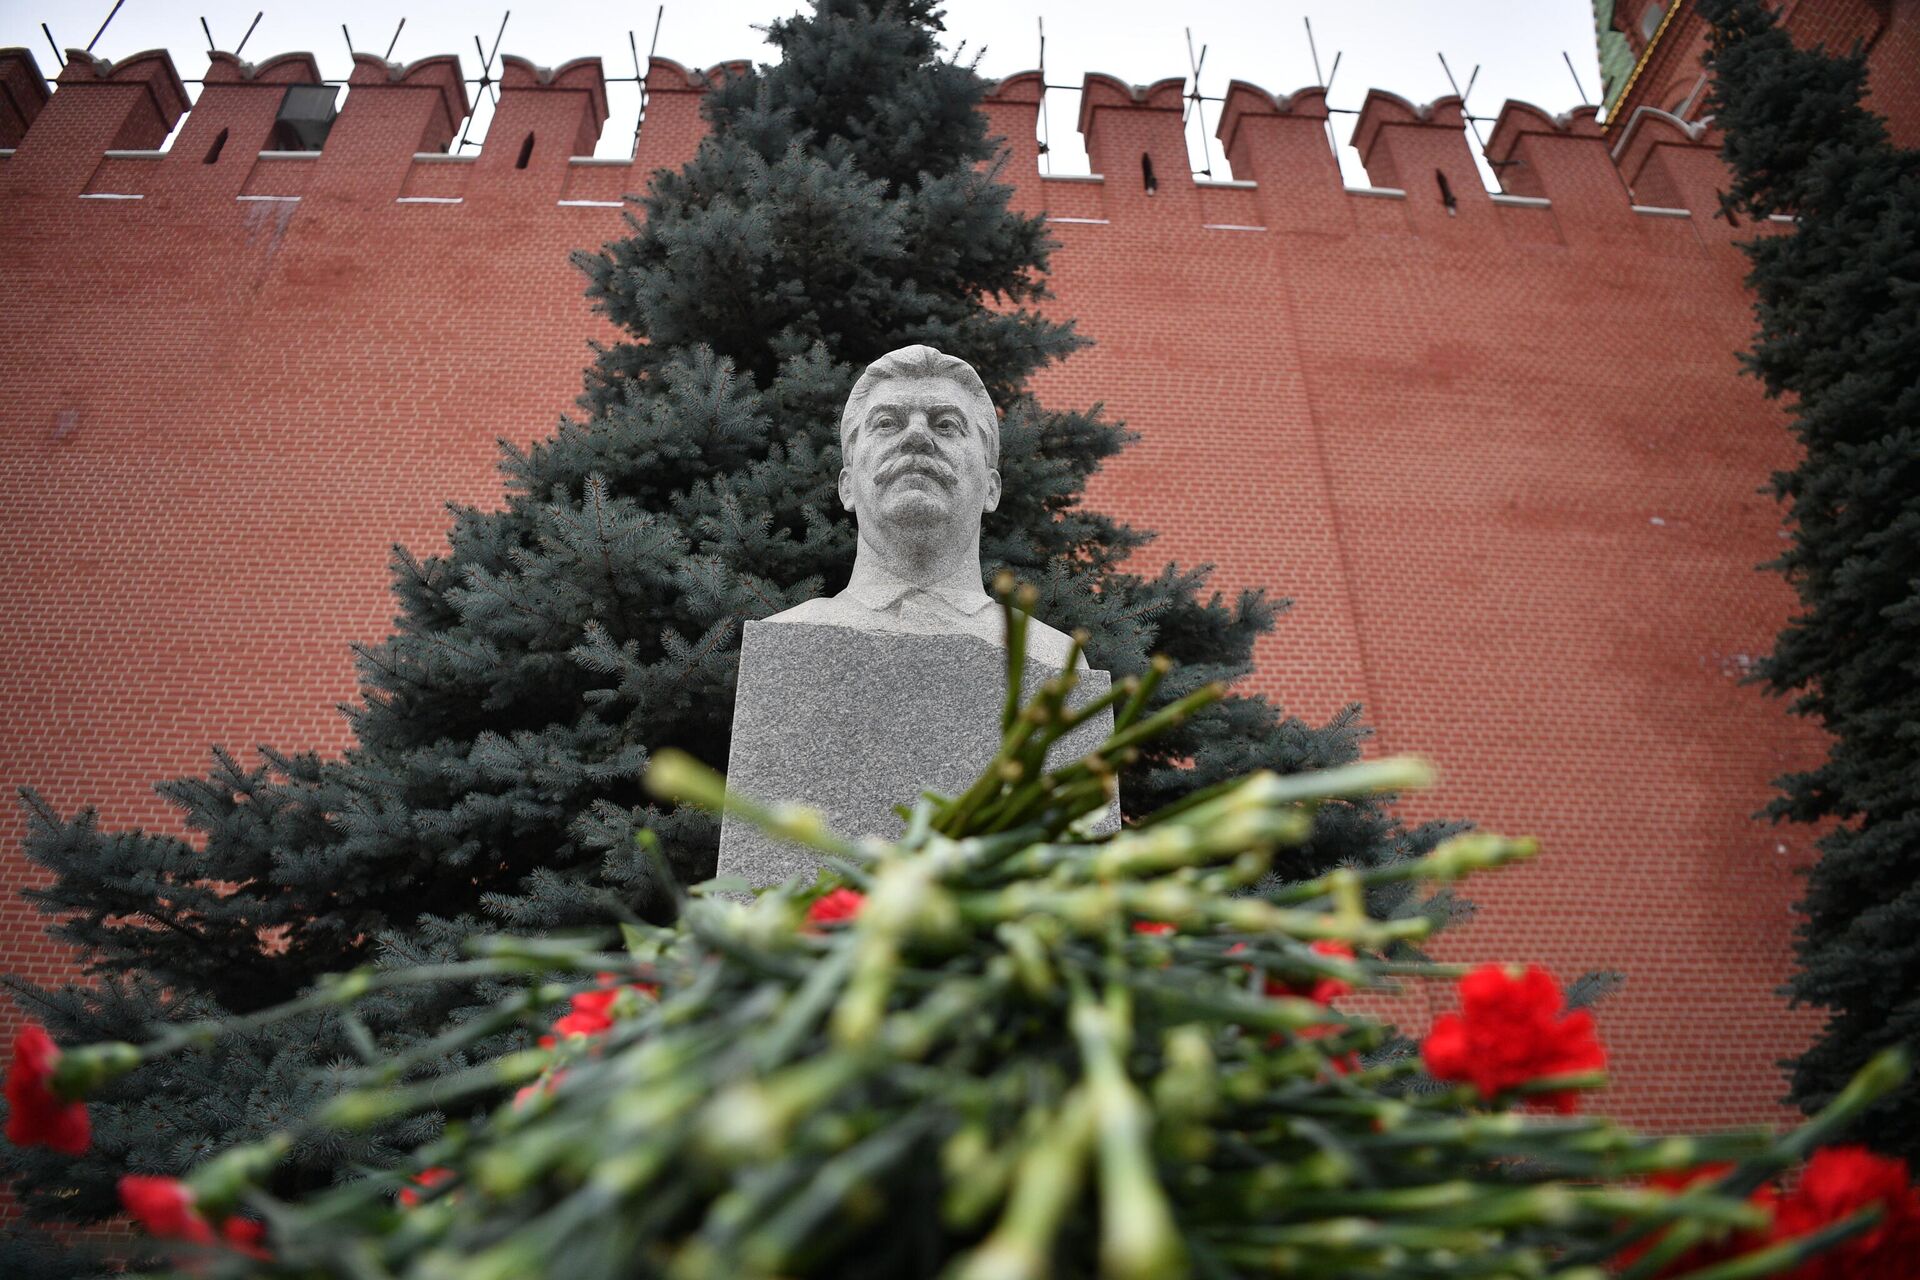 Где захоронен сталин иосиф виссарионович фото